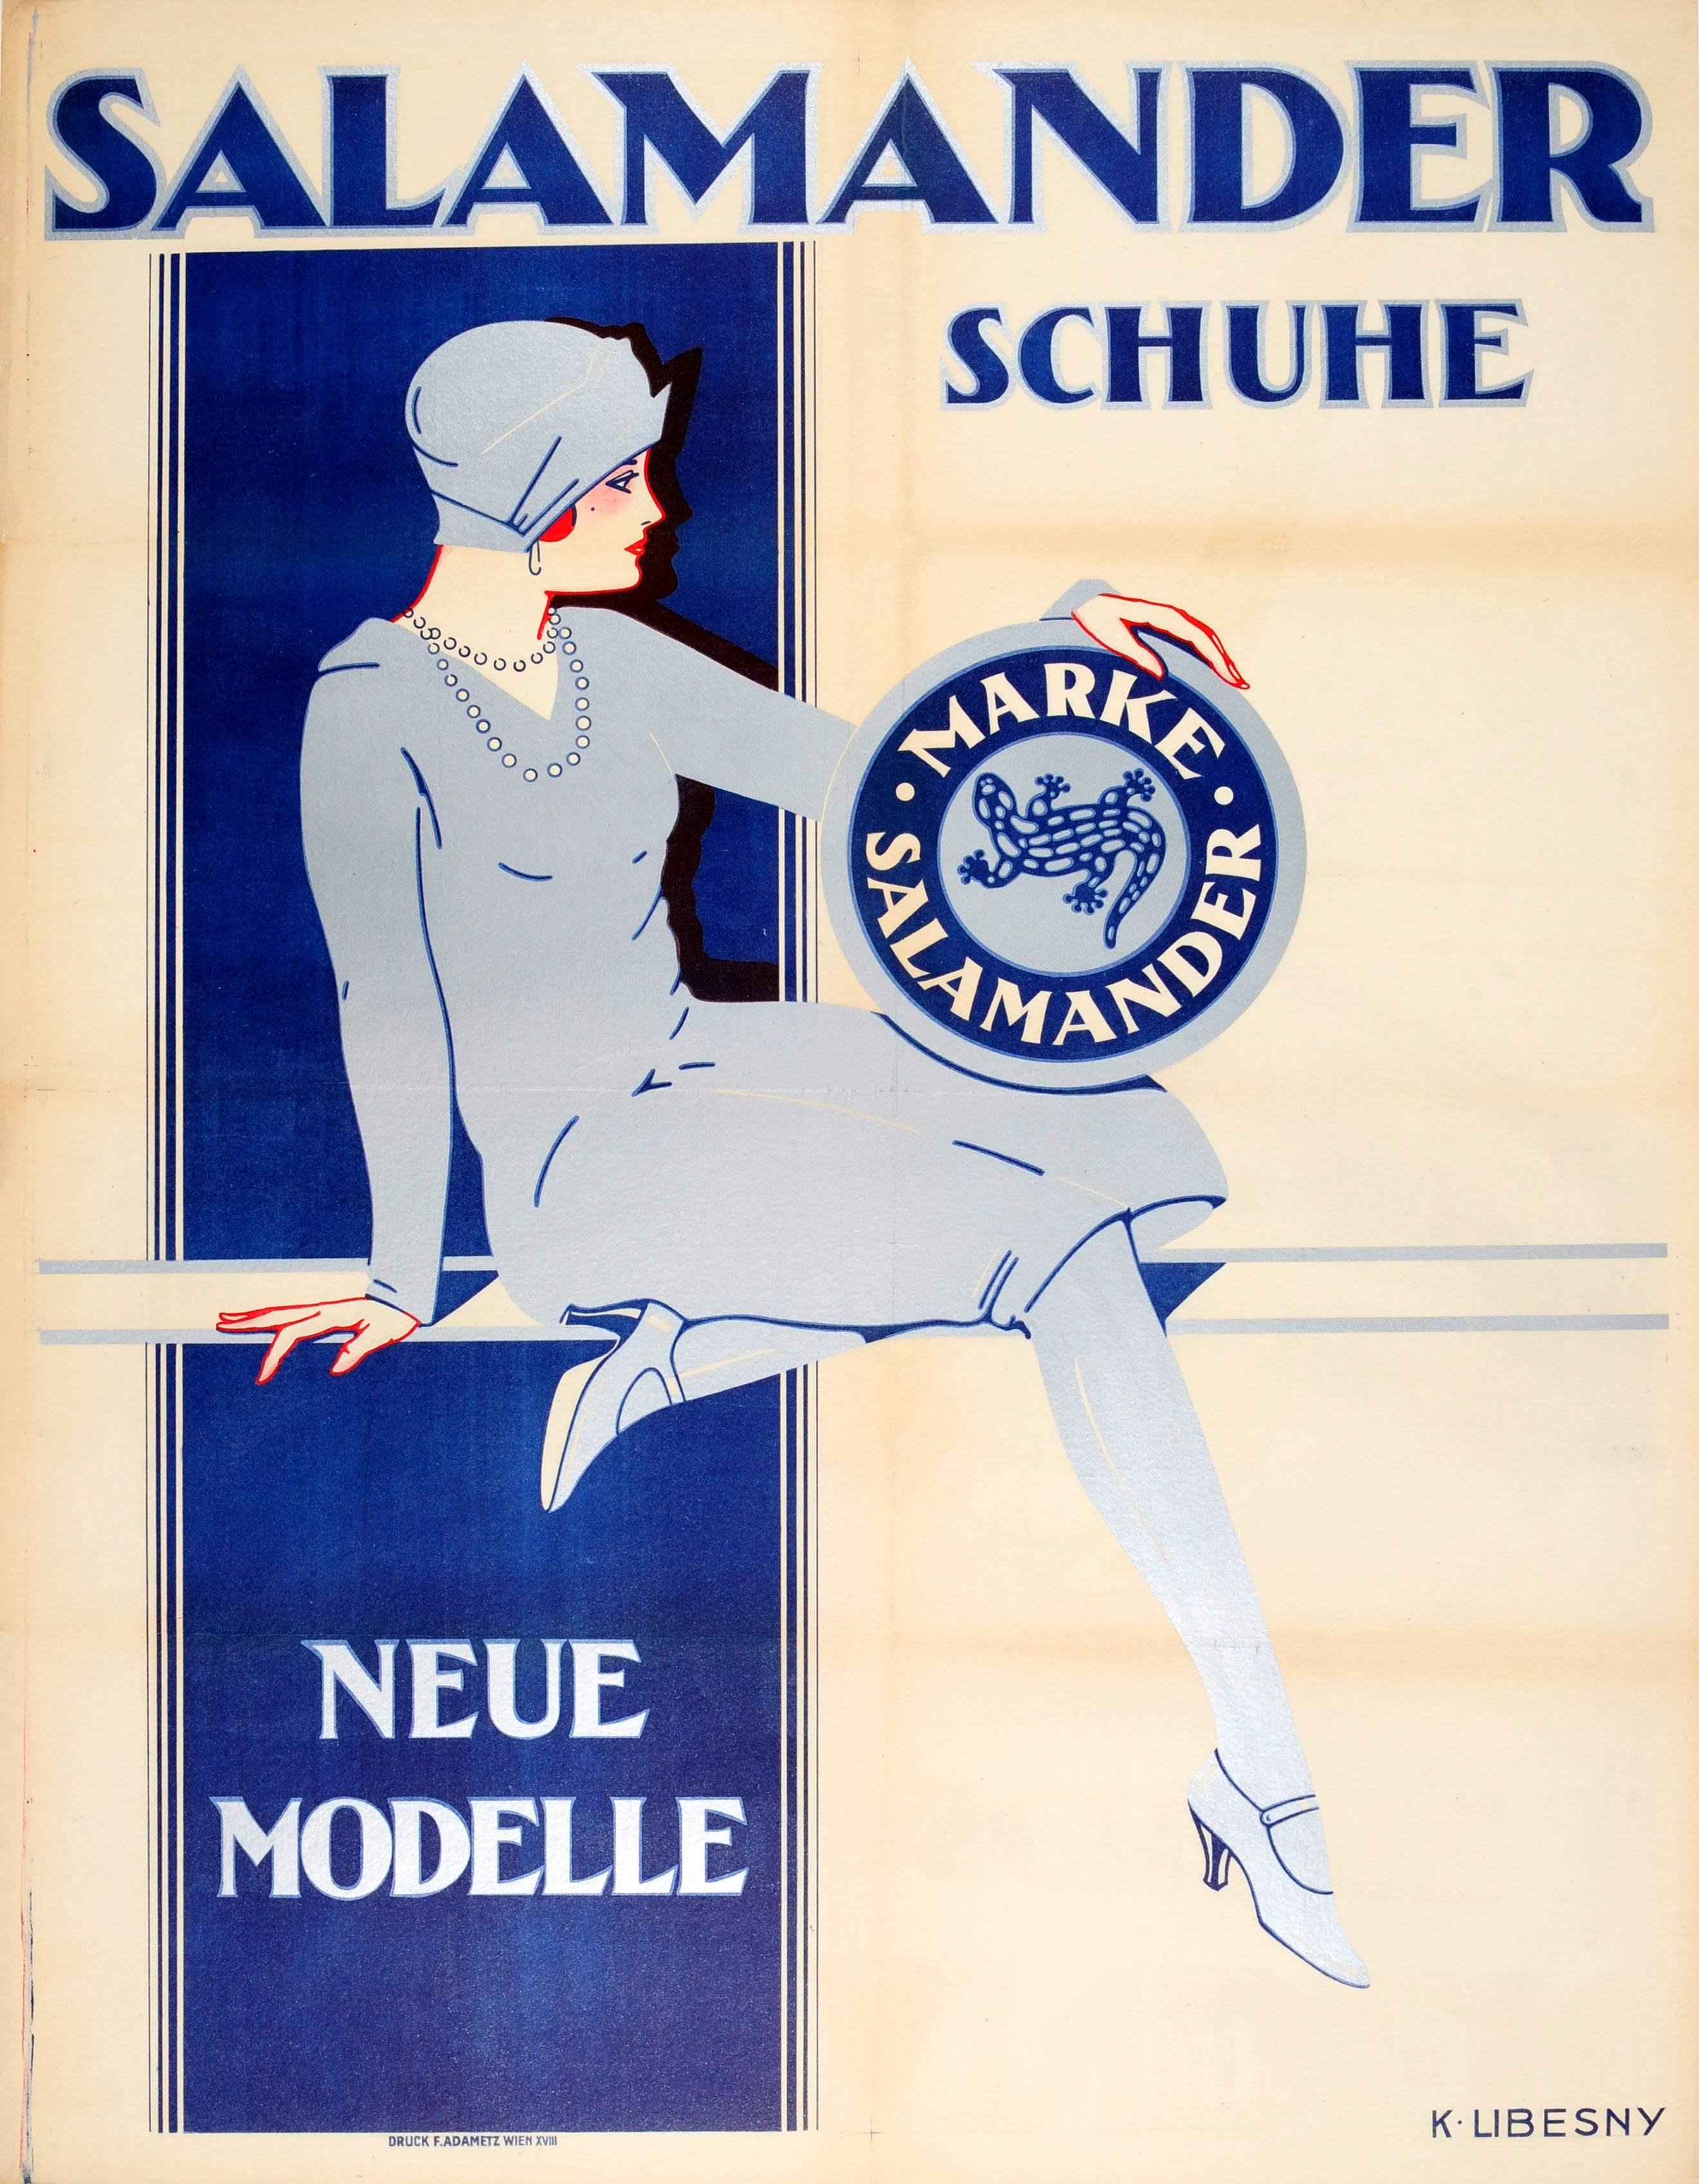 Unknown Print - Large Original 1920s Austrian Art Deco Advertising Poster For Salamander Shoes